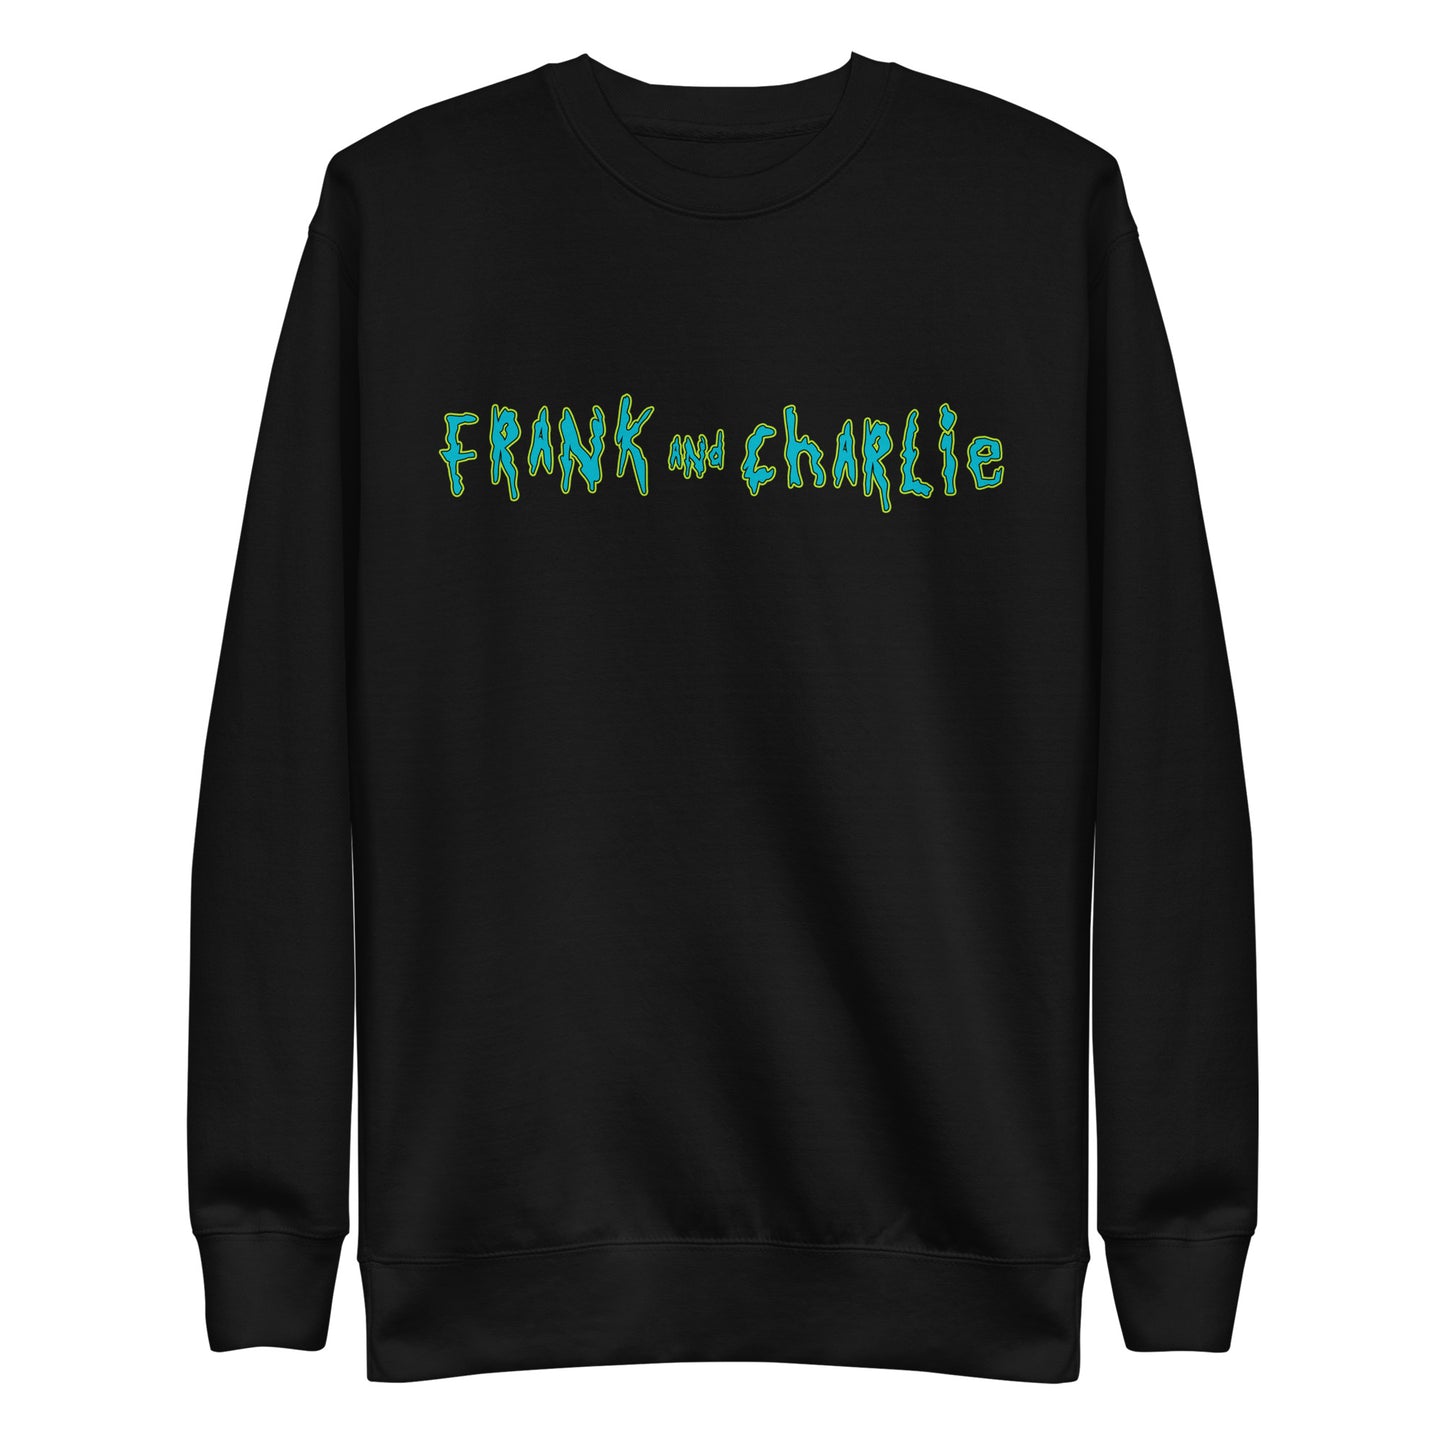 Frank and Charlie (Rick and Morty Parody) Unisex Premium Sweatshirt